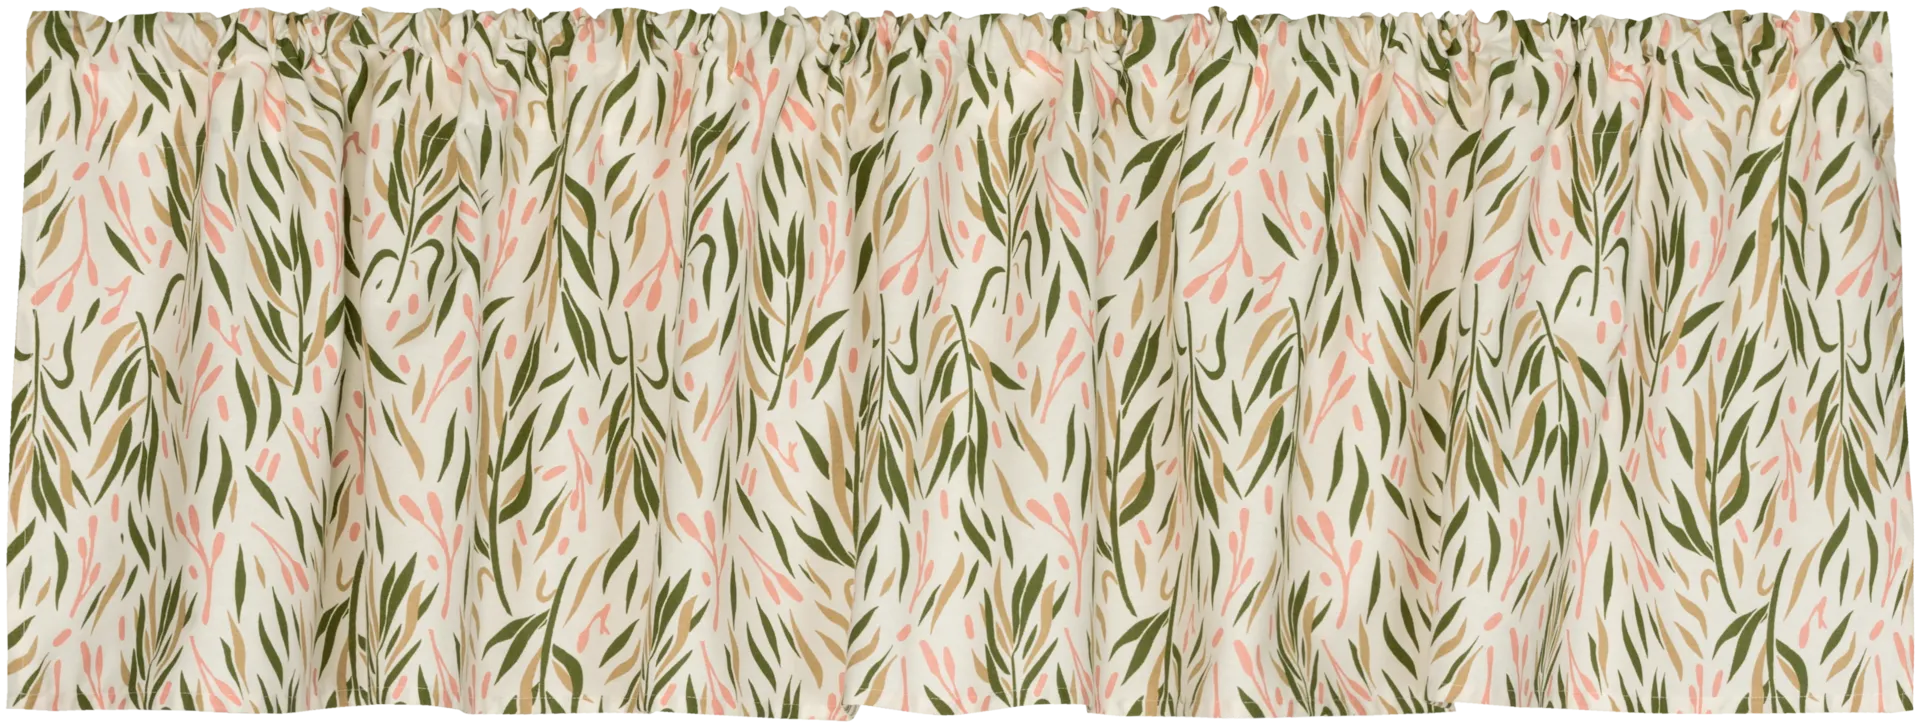 House verhokappa Elegant Reeds 250x50 cm, PatternLab - 1